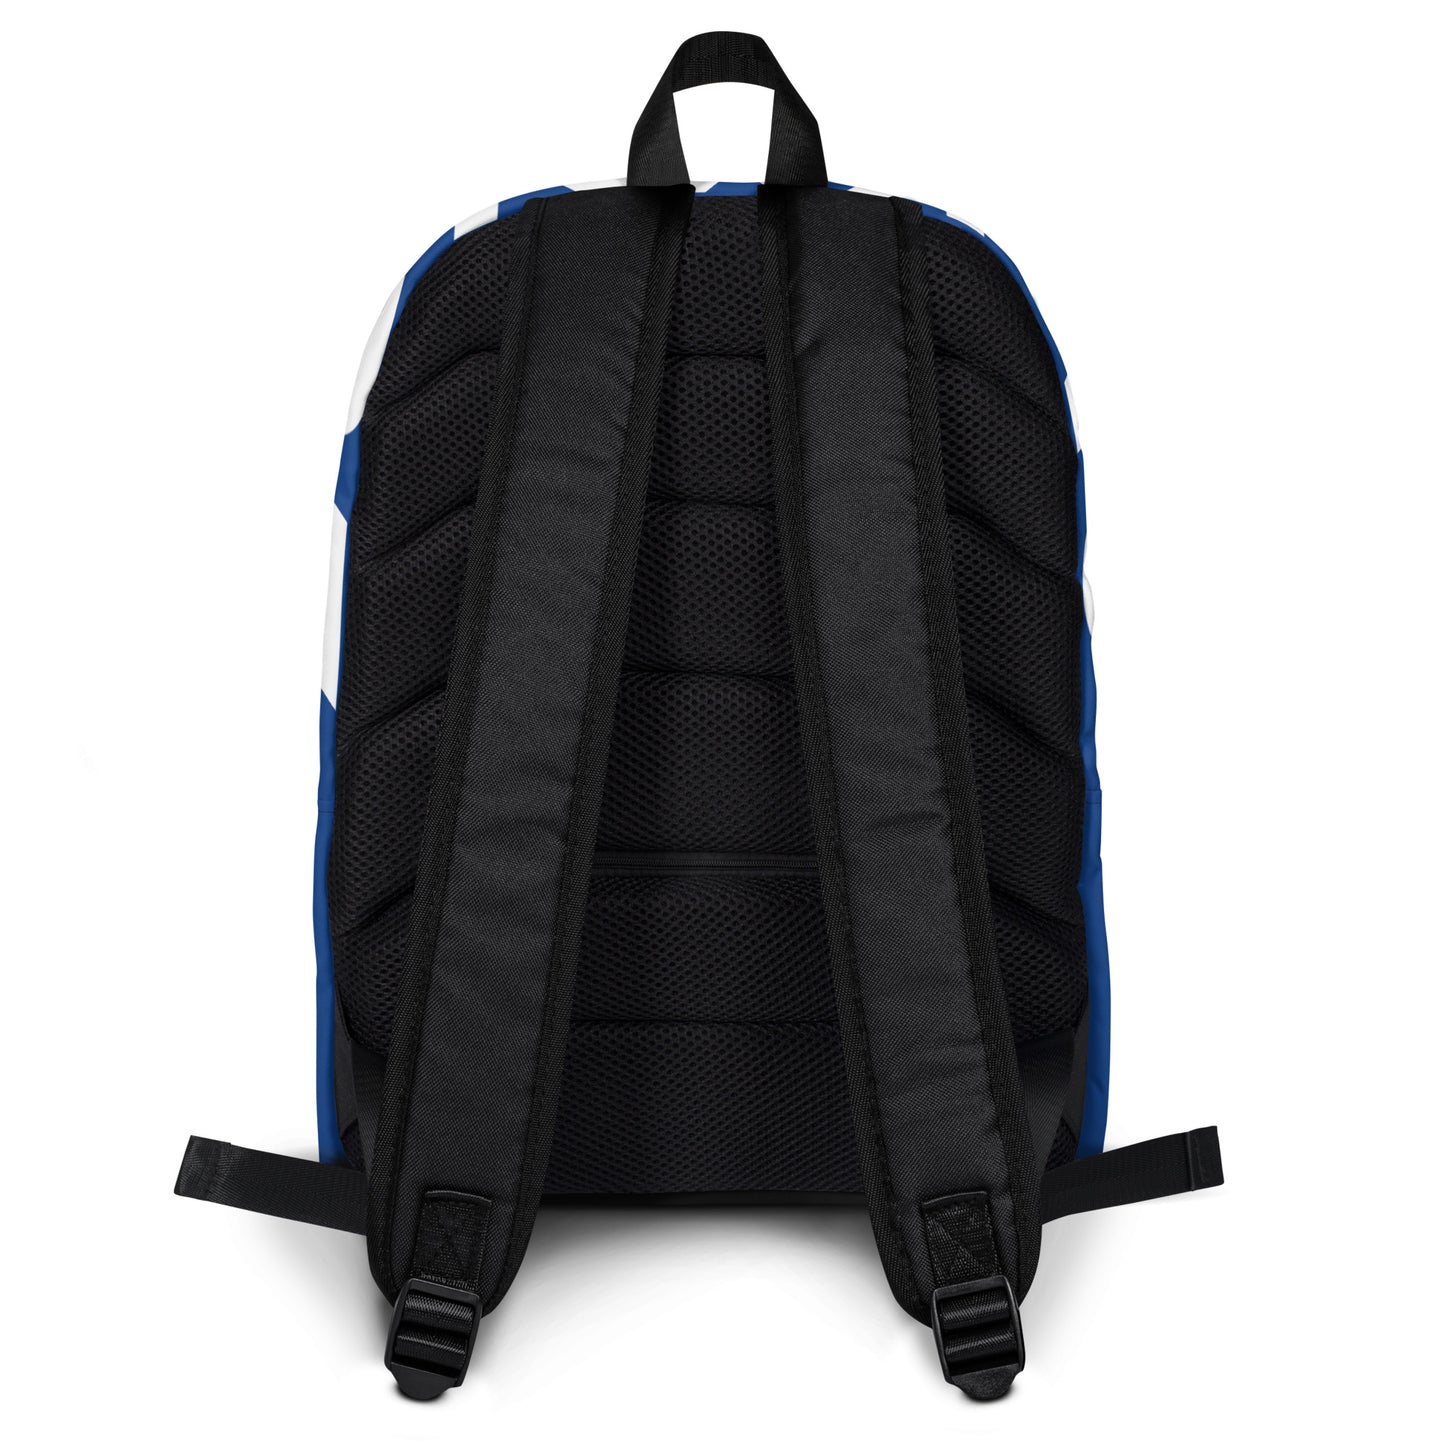 21 KYNGZ Blue Backpack